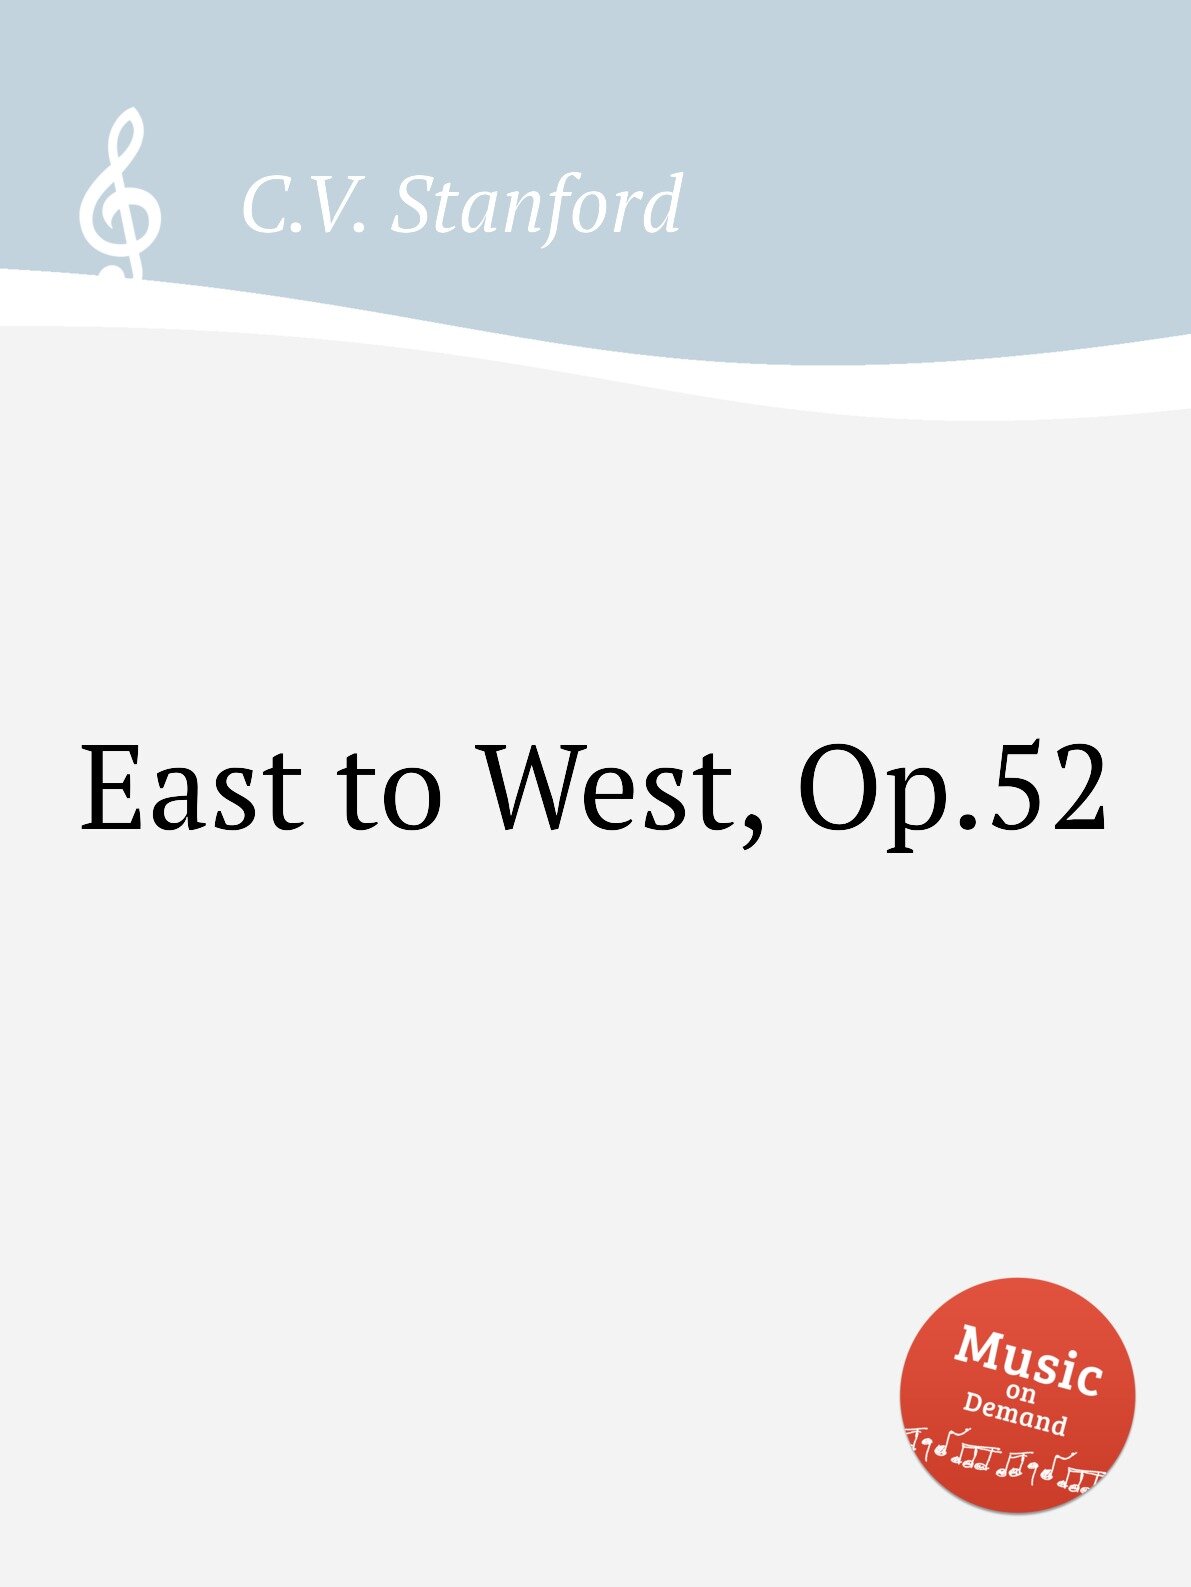 East to West Op.52